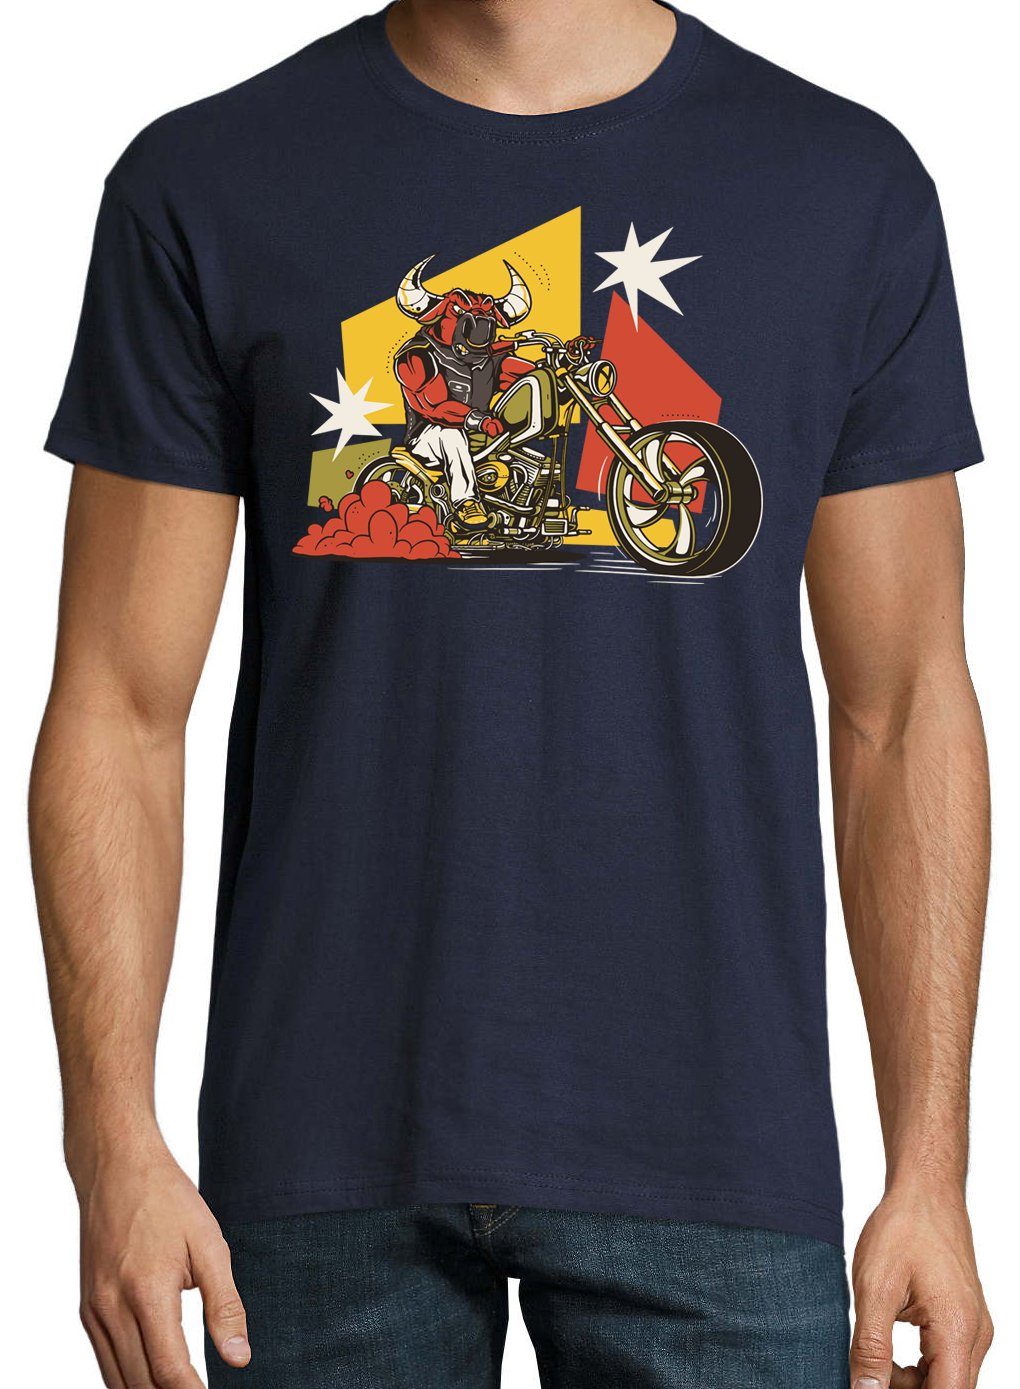 T-Shirt Frontprint mit Biker Youth Designz Navyblau trendigem Herren T-Shirt Bull